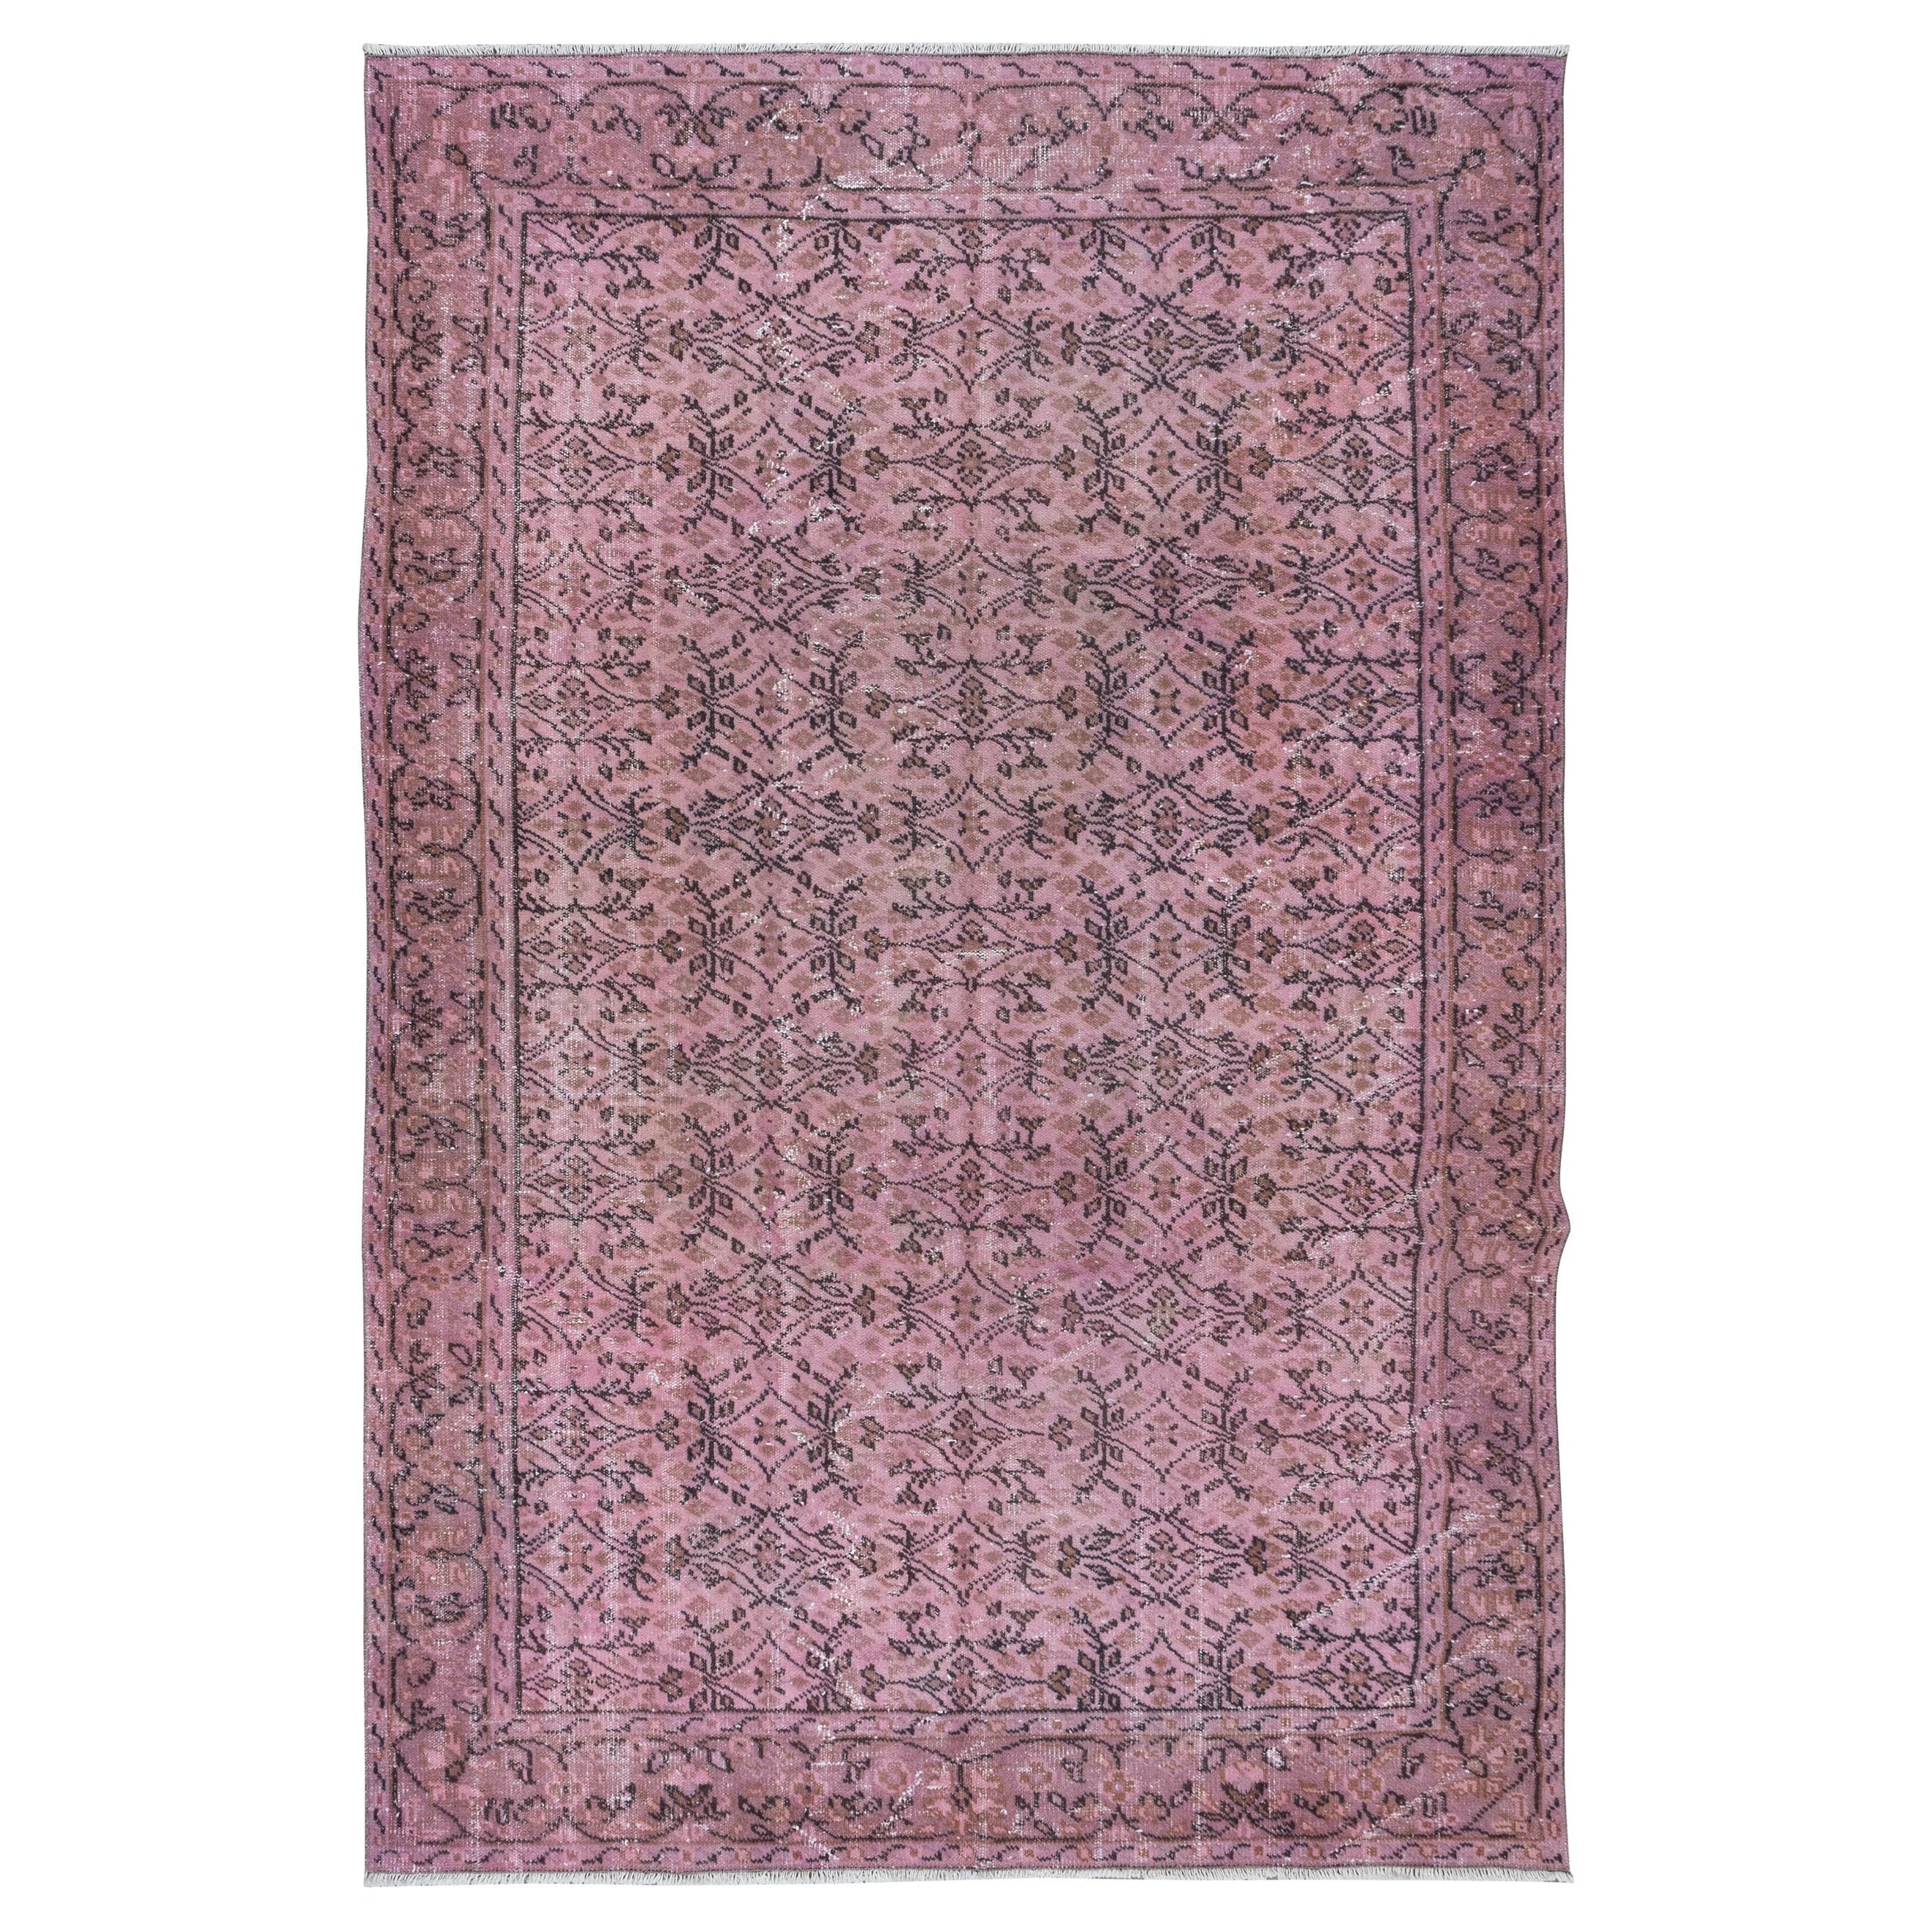 6.6x10 Ft Handmade Floral Pattern Floor Area Rug in Pink, Modern Turkish Carpet For Sale